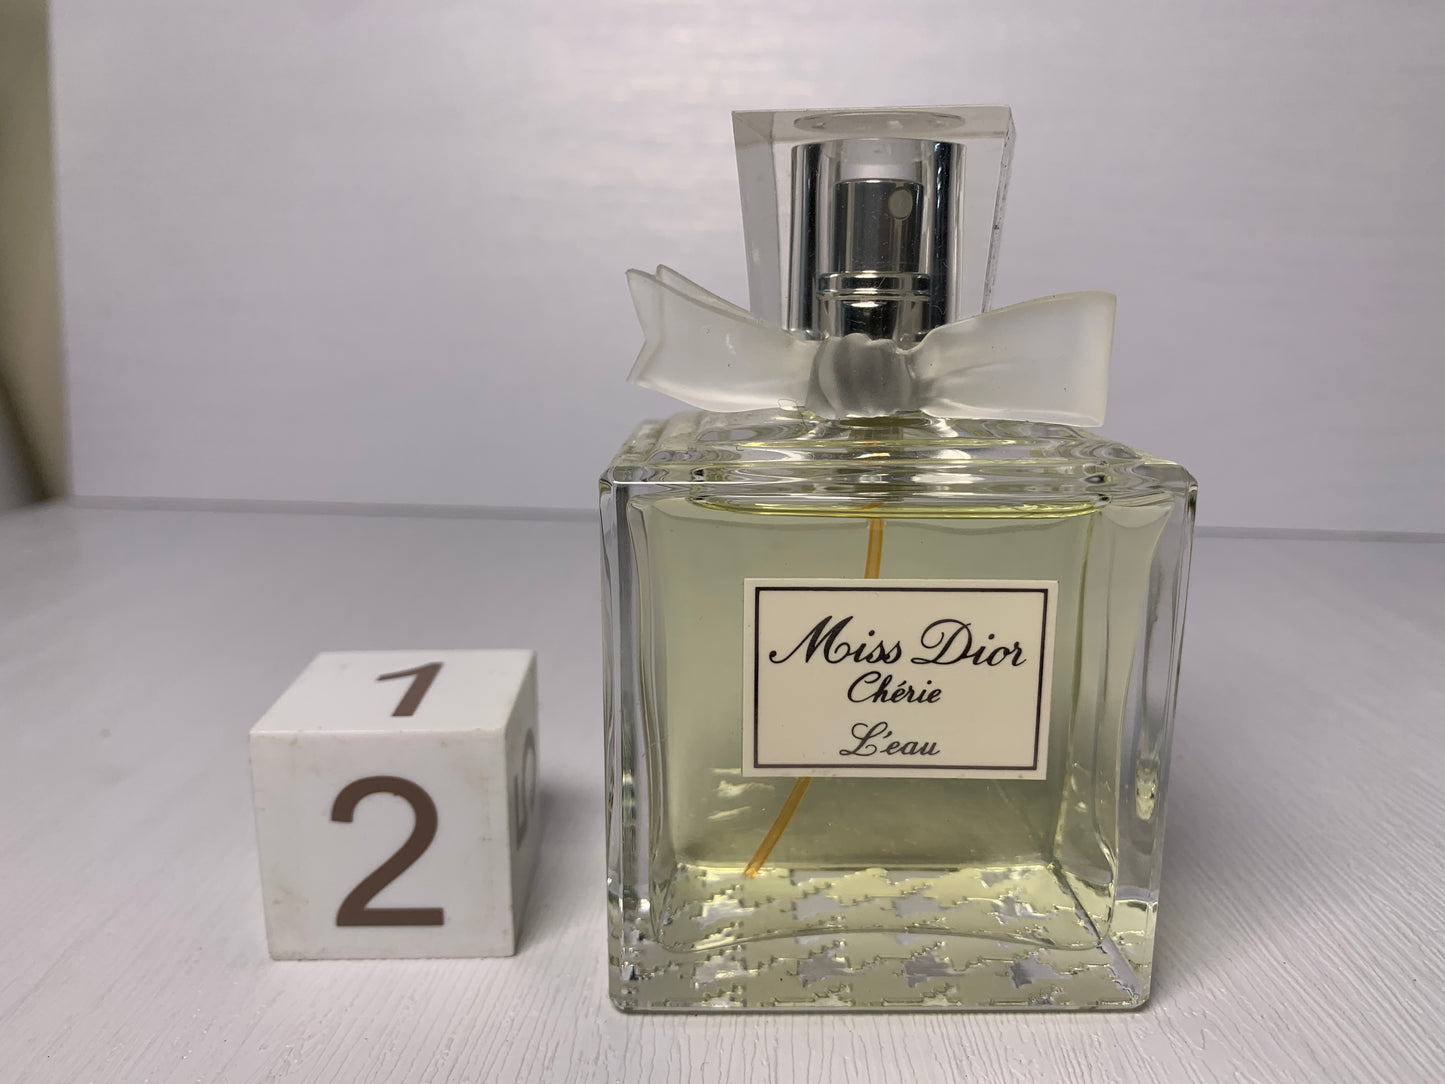 Rare Miss Dior Cherie 100 毫升 3.4 盎司 50 毫升淡香水香水 - 6FEB22